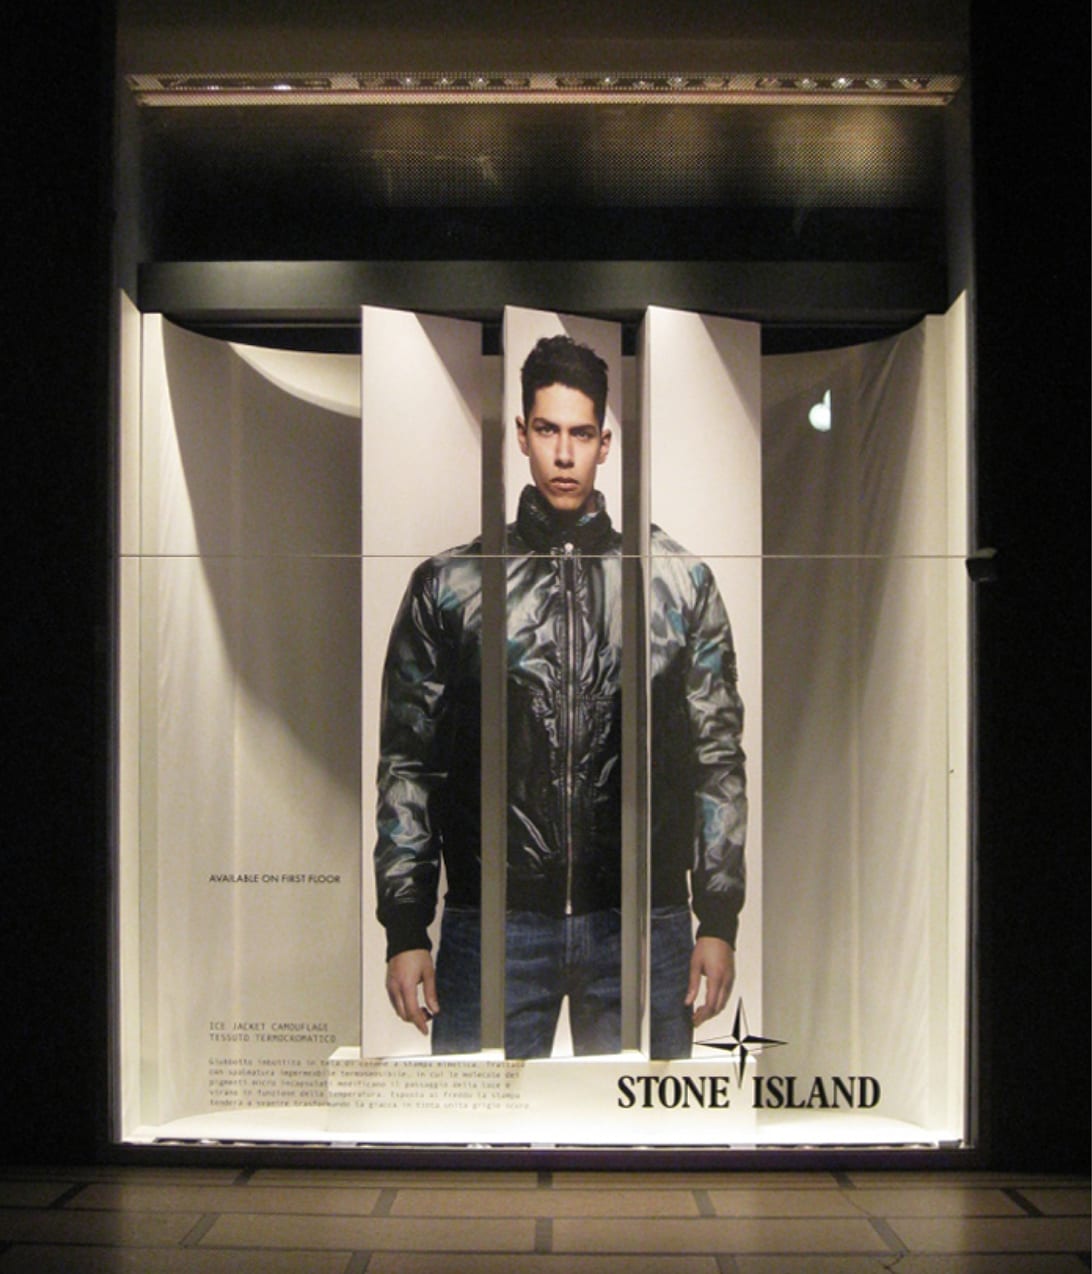 Stone Island heat reflective jacket shop window design